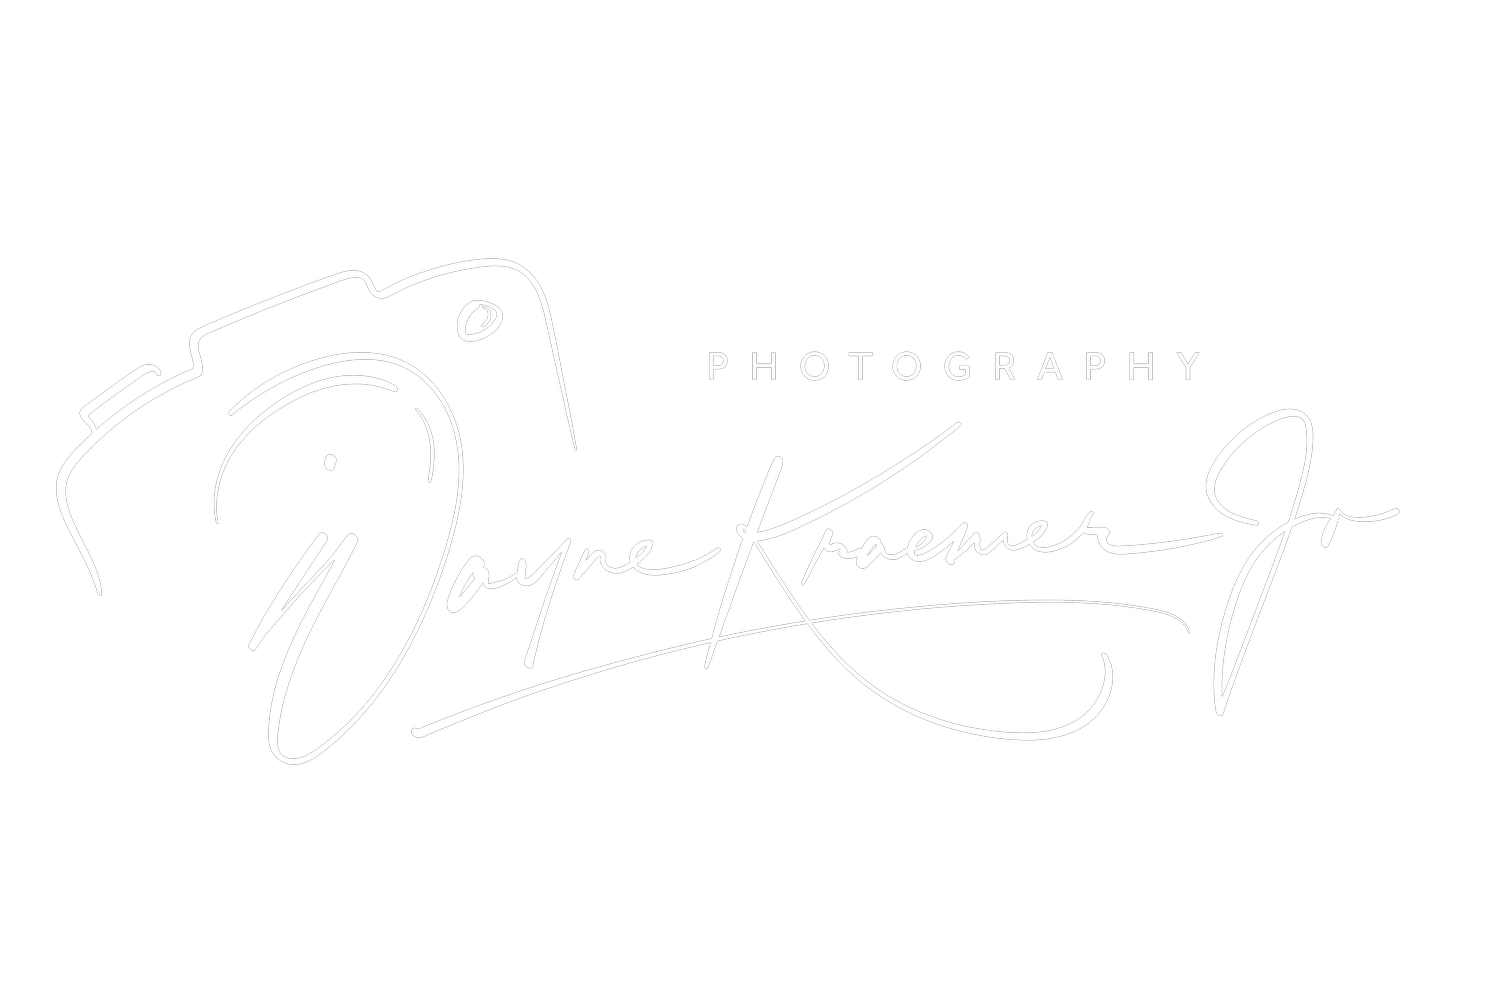 Wayne Kraemer Jr Photography